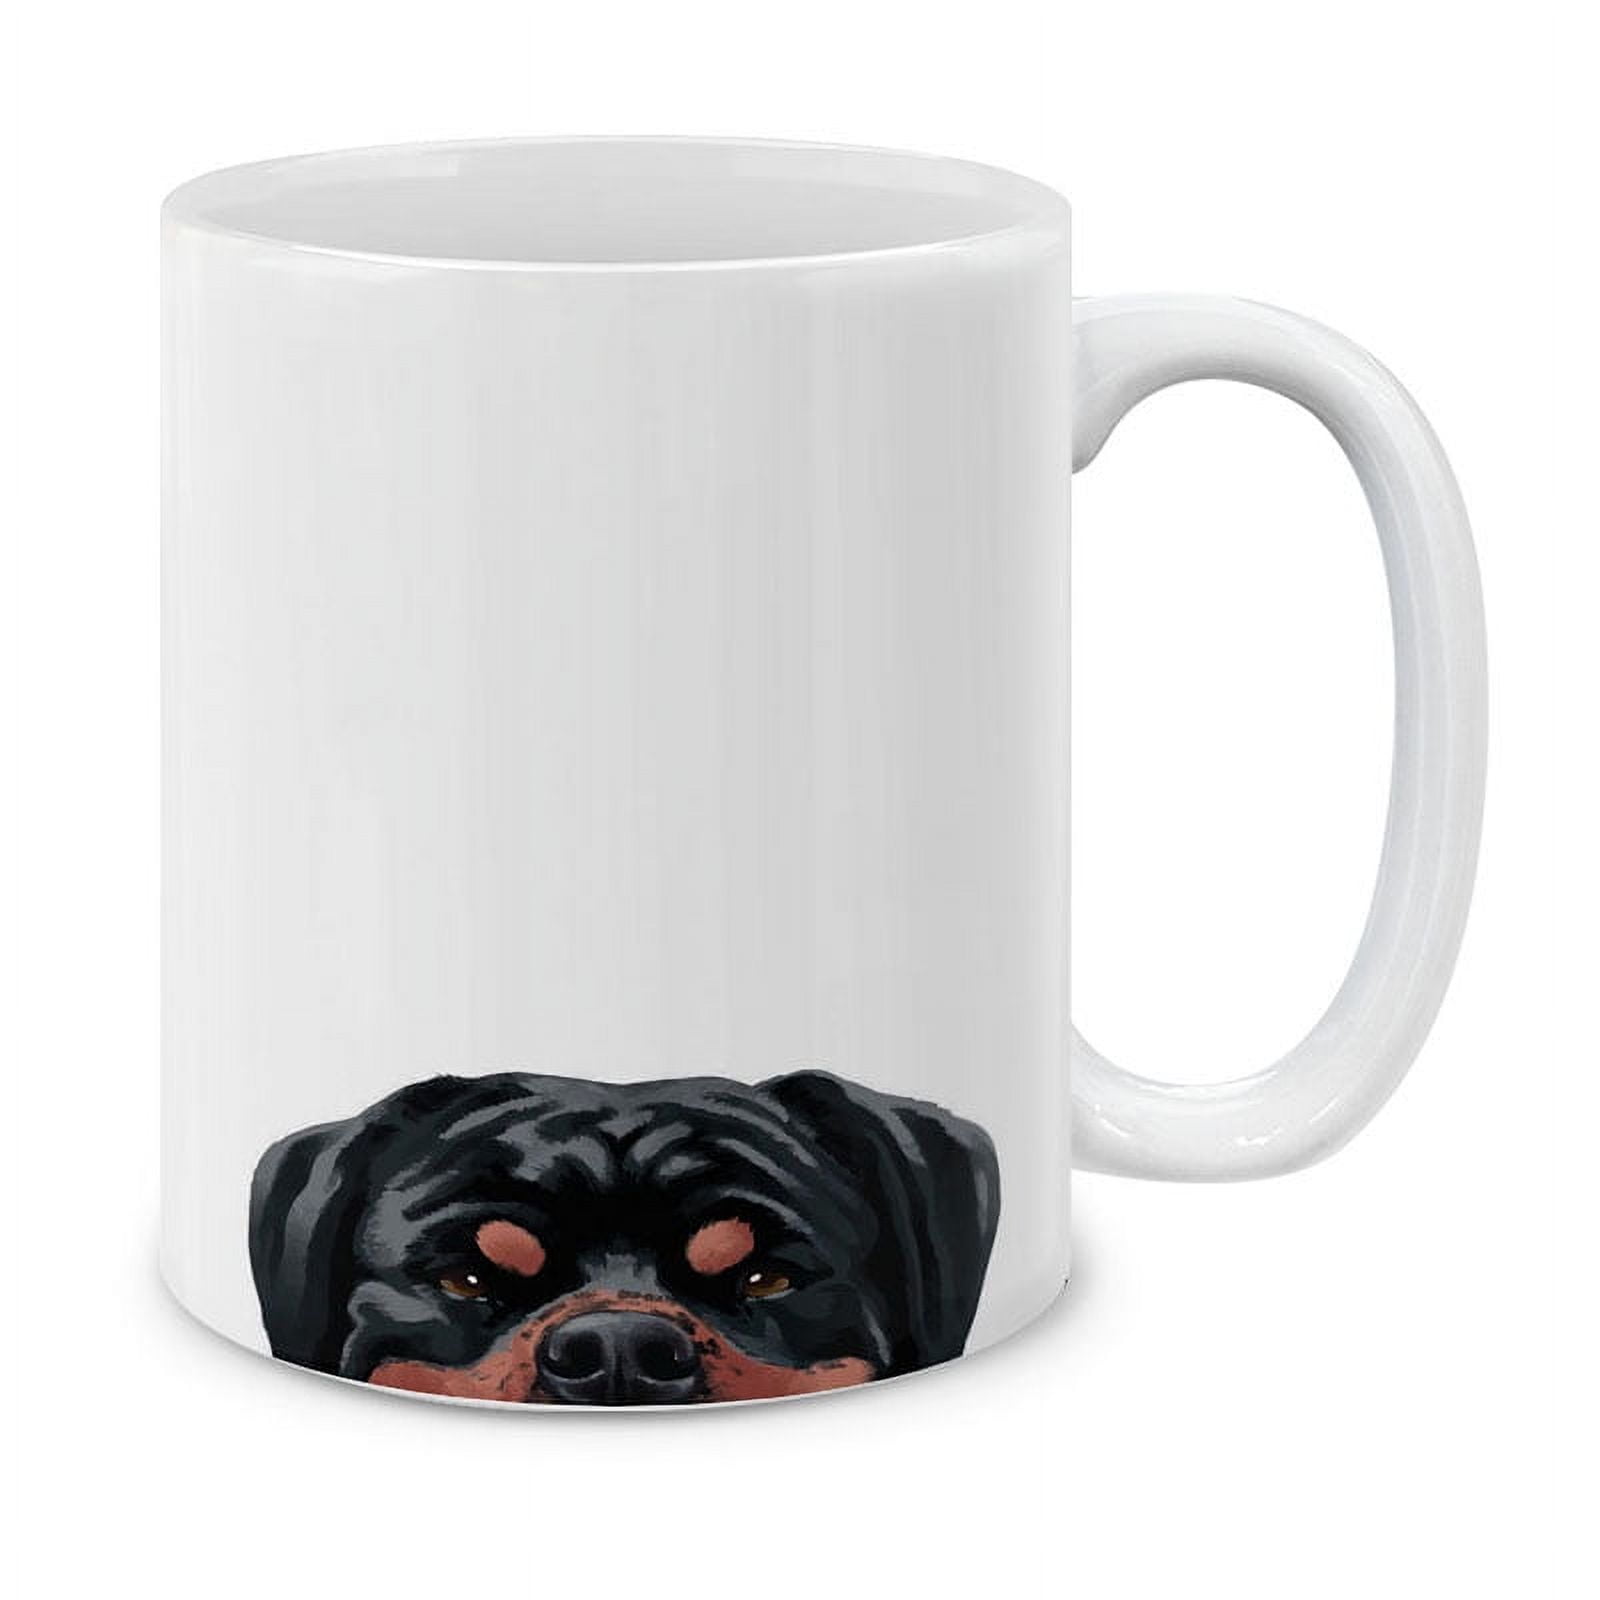 Wudruncy Ins Cute Dog Christmas Mug Cup Coffee Tea Mugs With